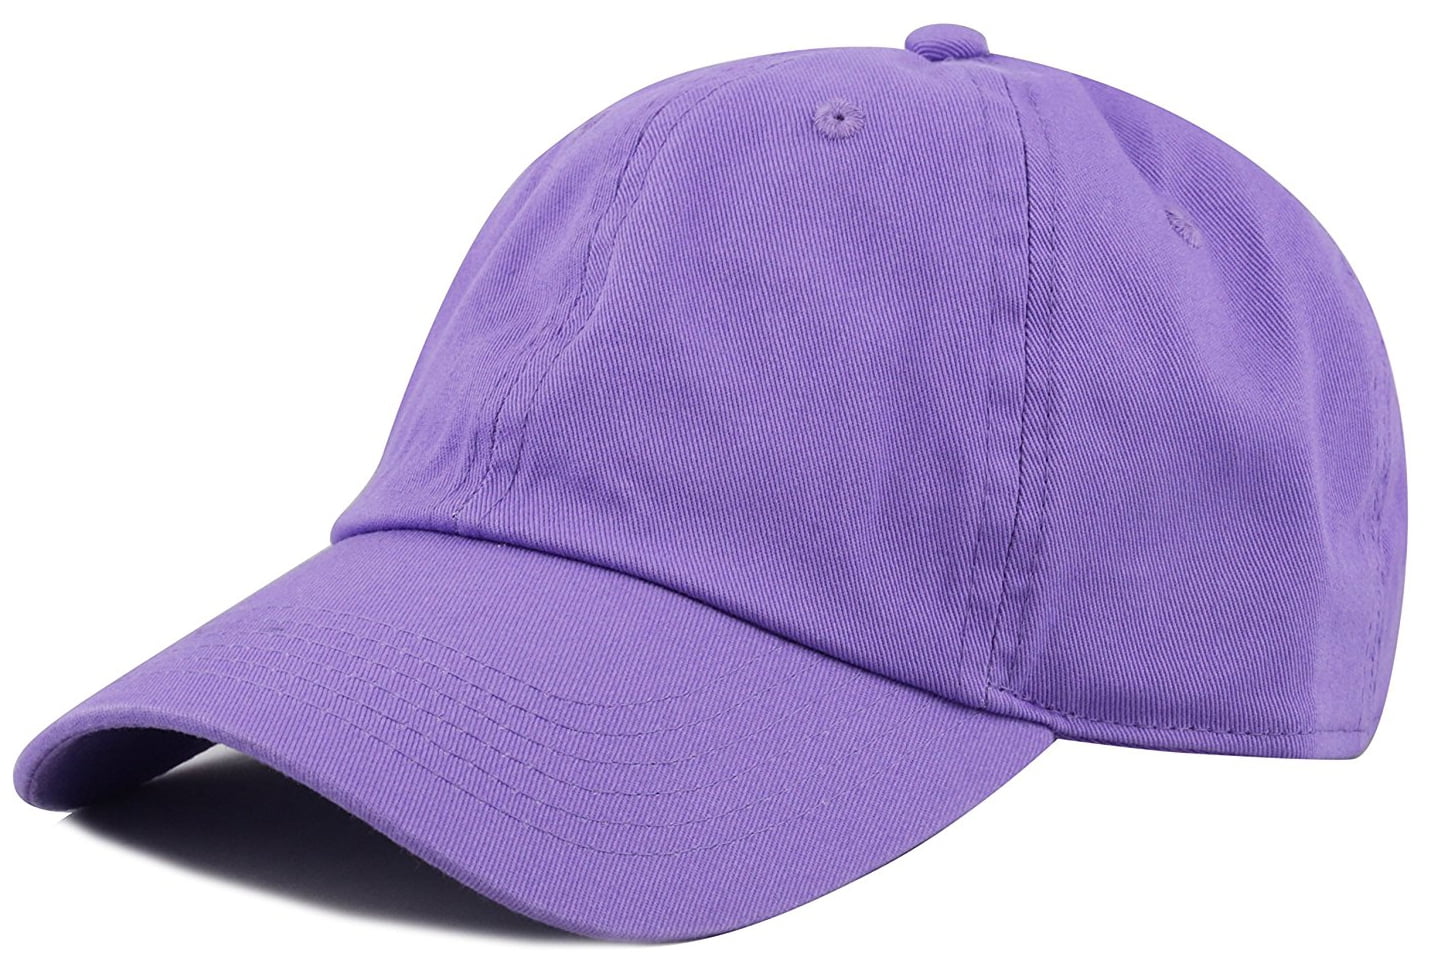 Gelante Adult Unisex Baseball Hat Cap 100% Cotton Plain Blank